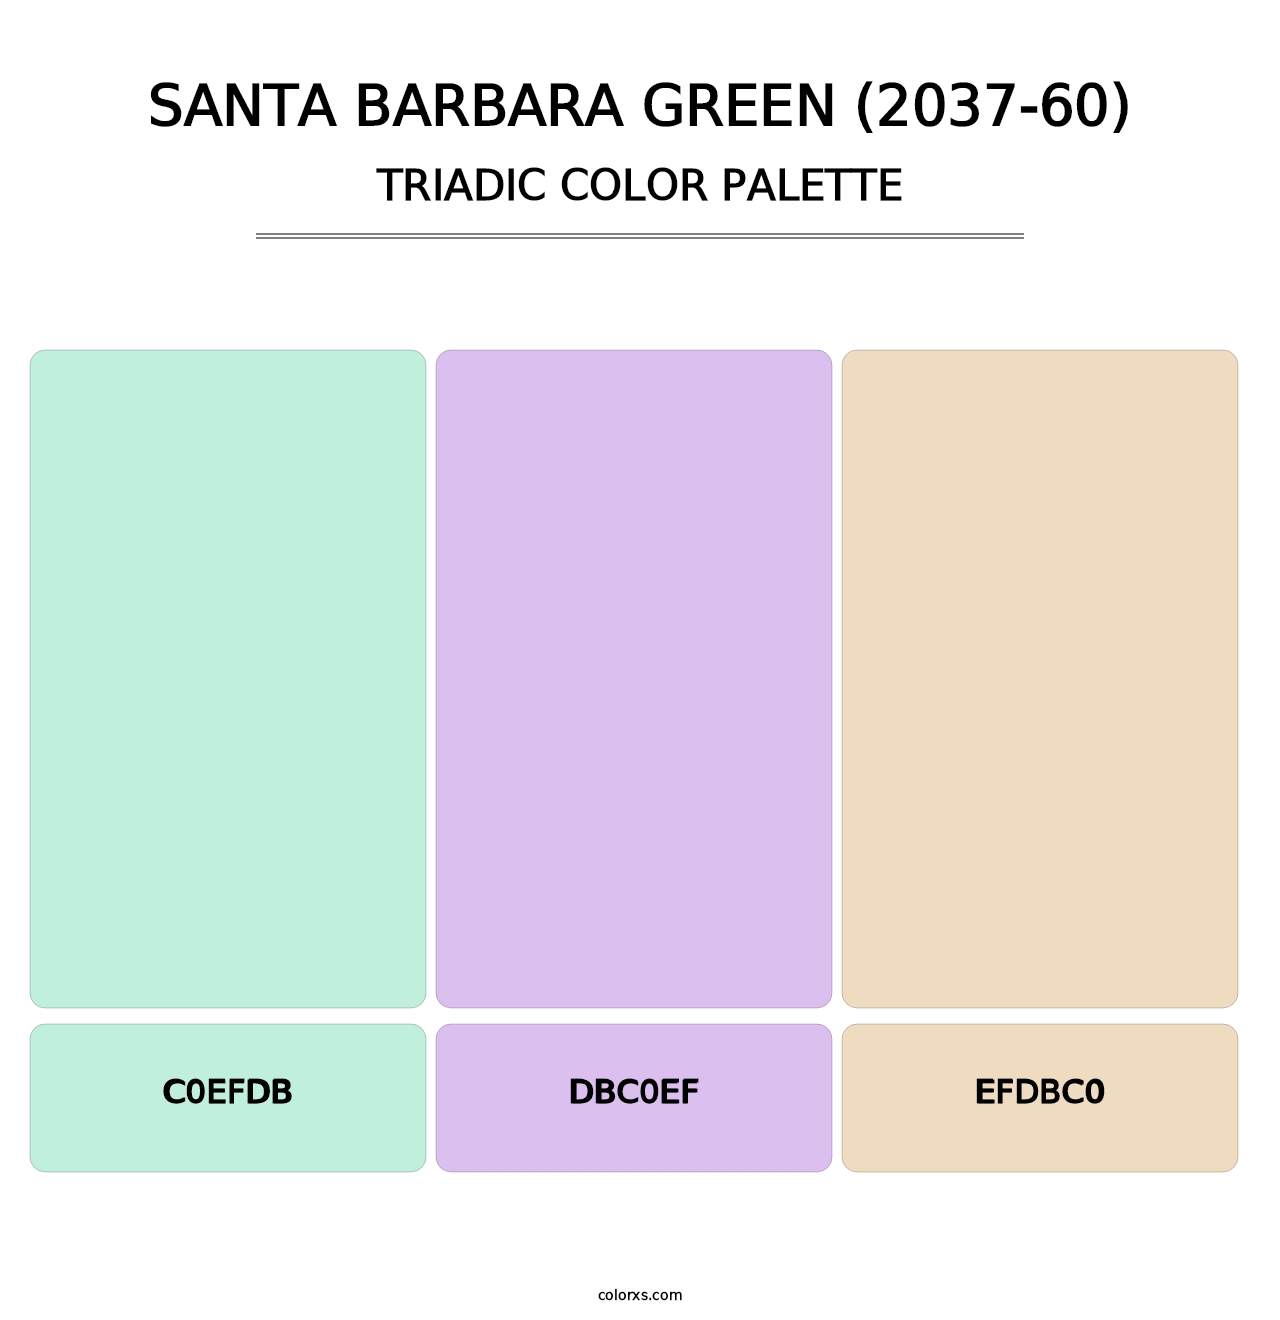 Santa Barbara Green (2037-60) - Triadic Color Palette